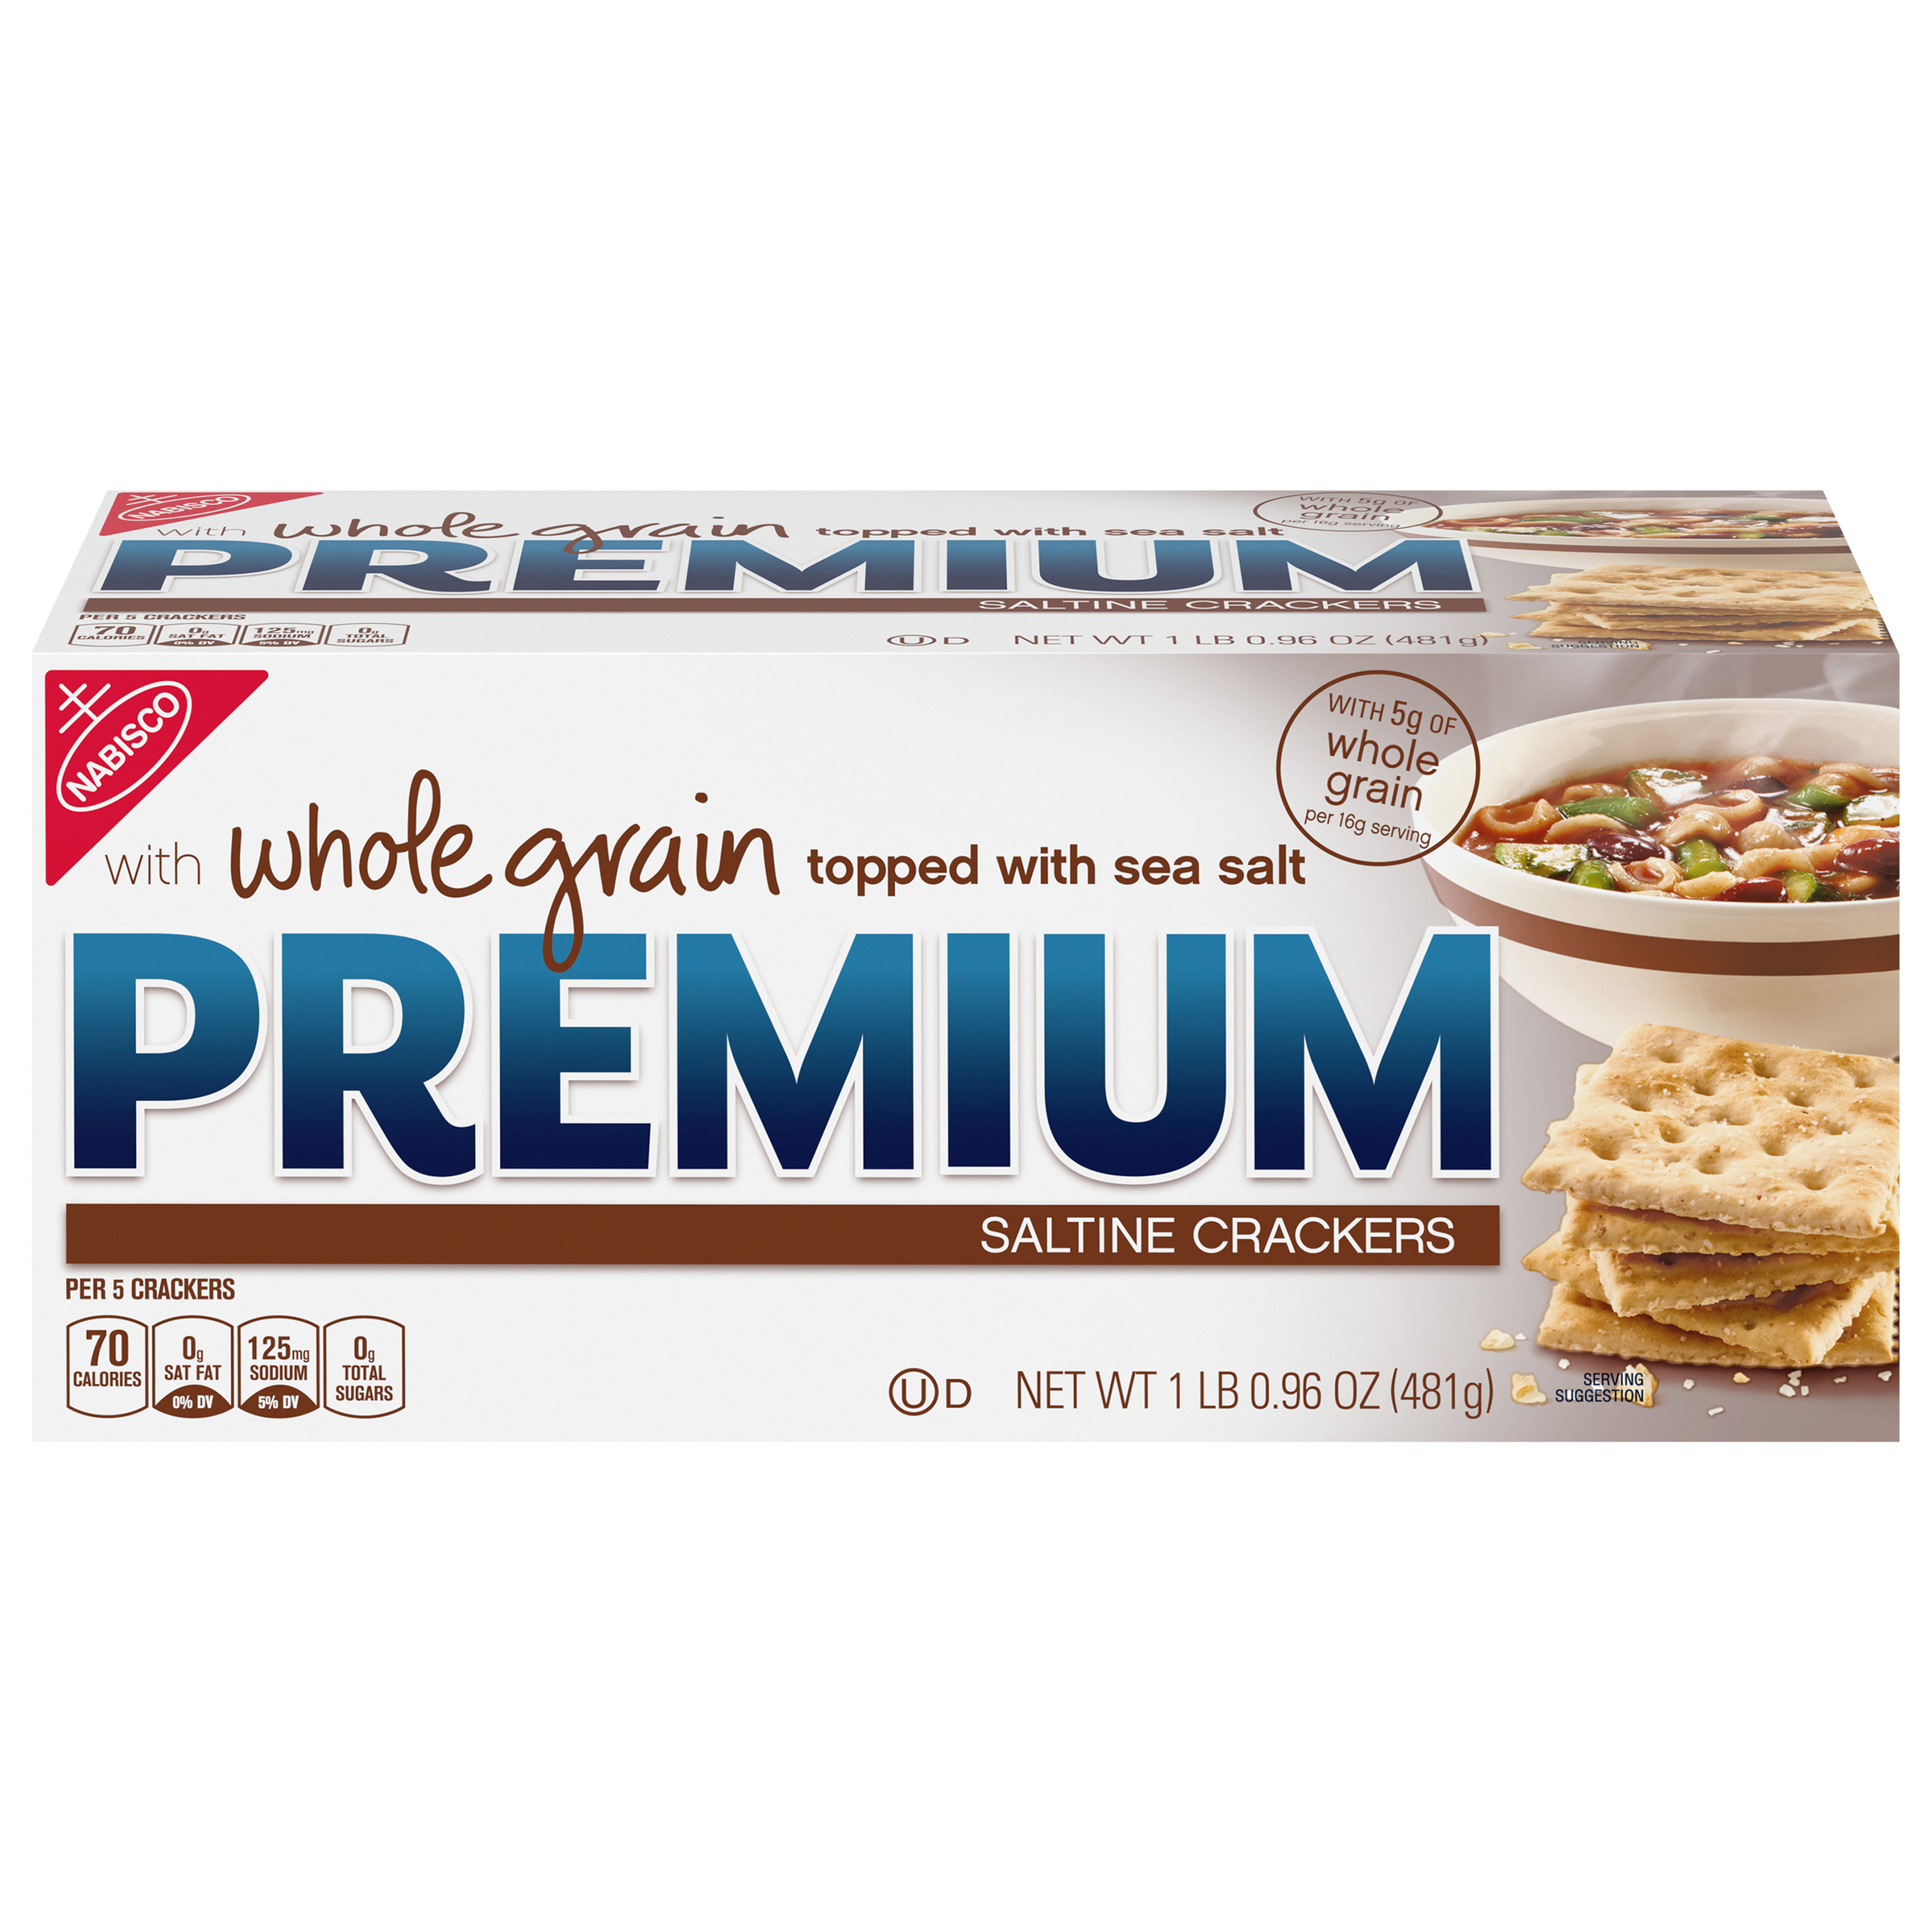 PREMIUM Whole Grain Crackers 1.06 lb